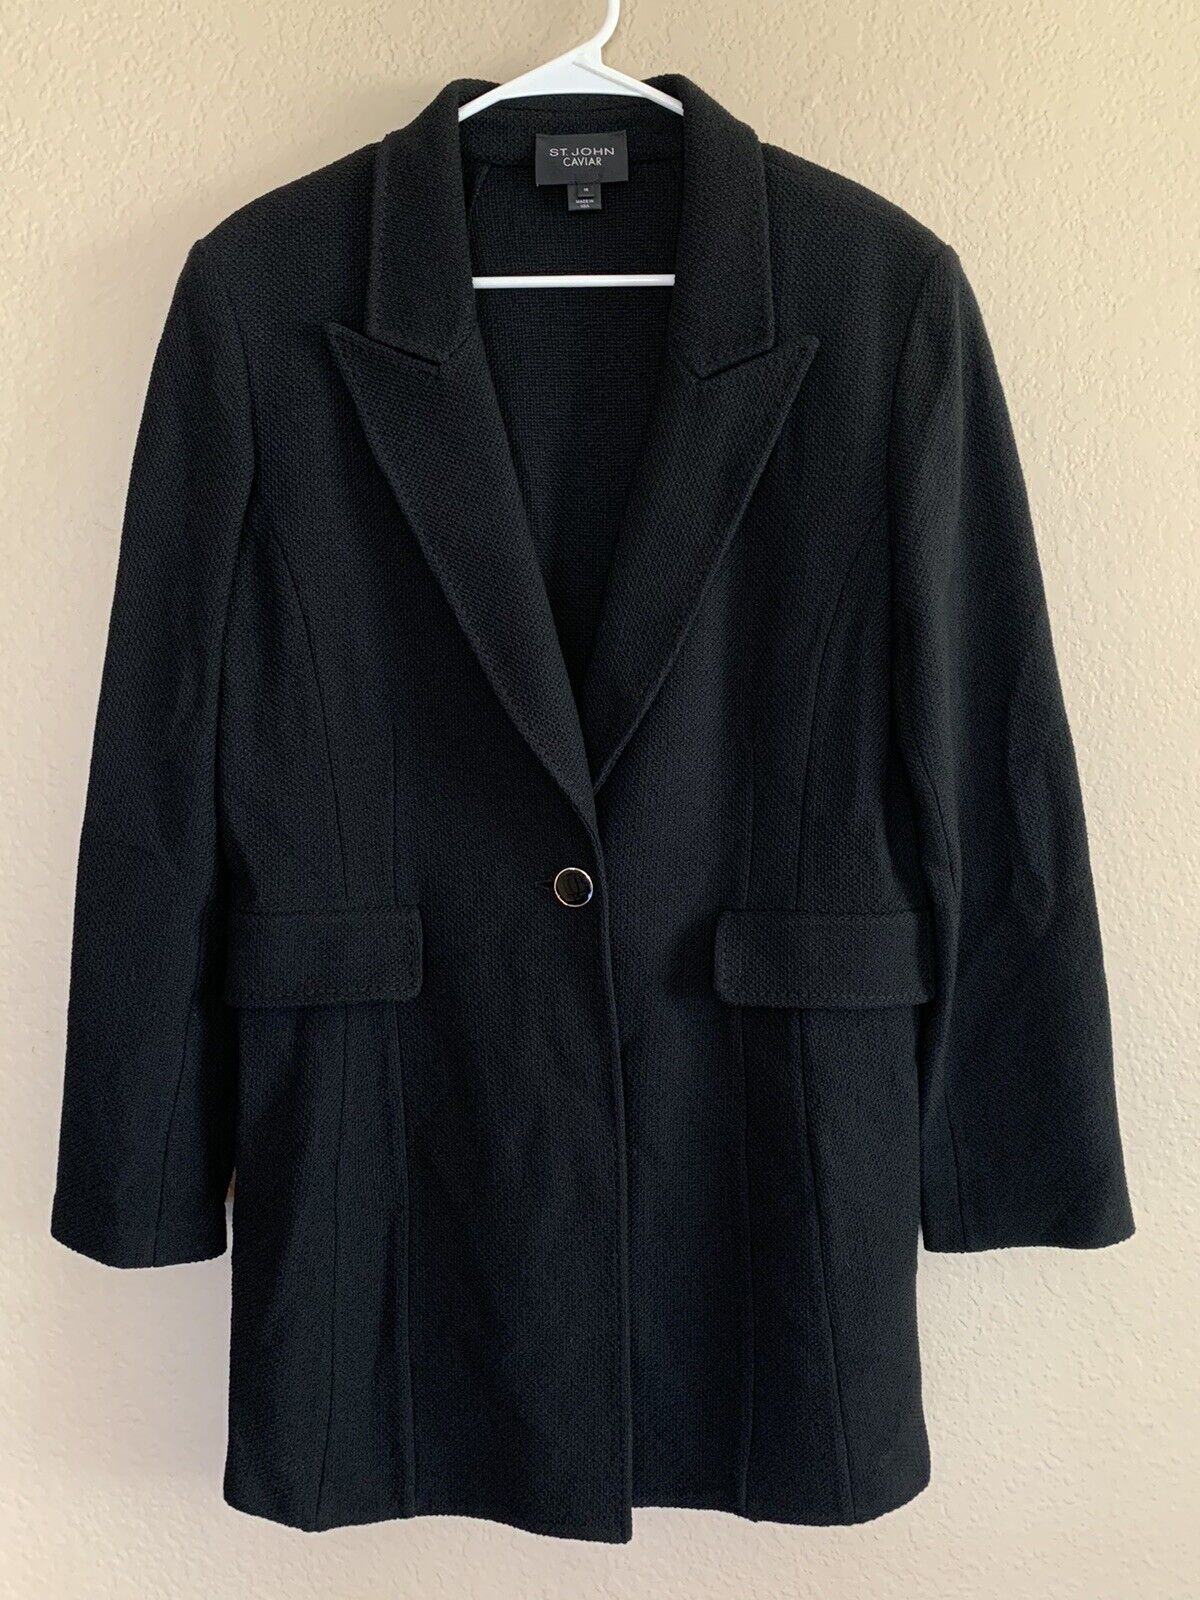 ST JOHN Caviar Blazer Coat Suit Jacket Black Wool Blend LONG Textured SZ 14